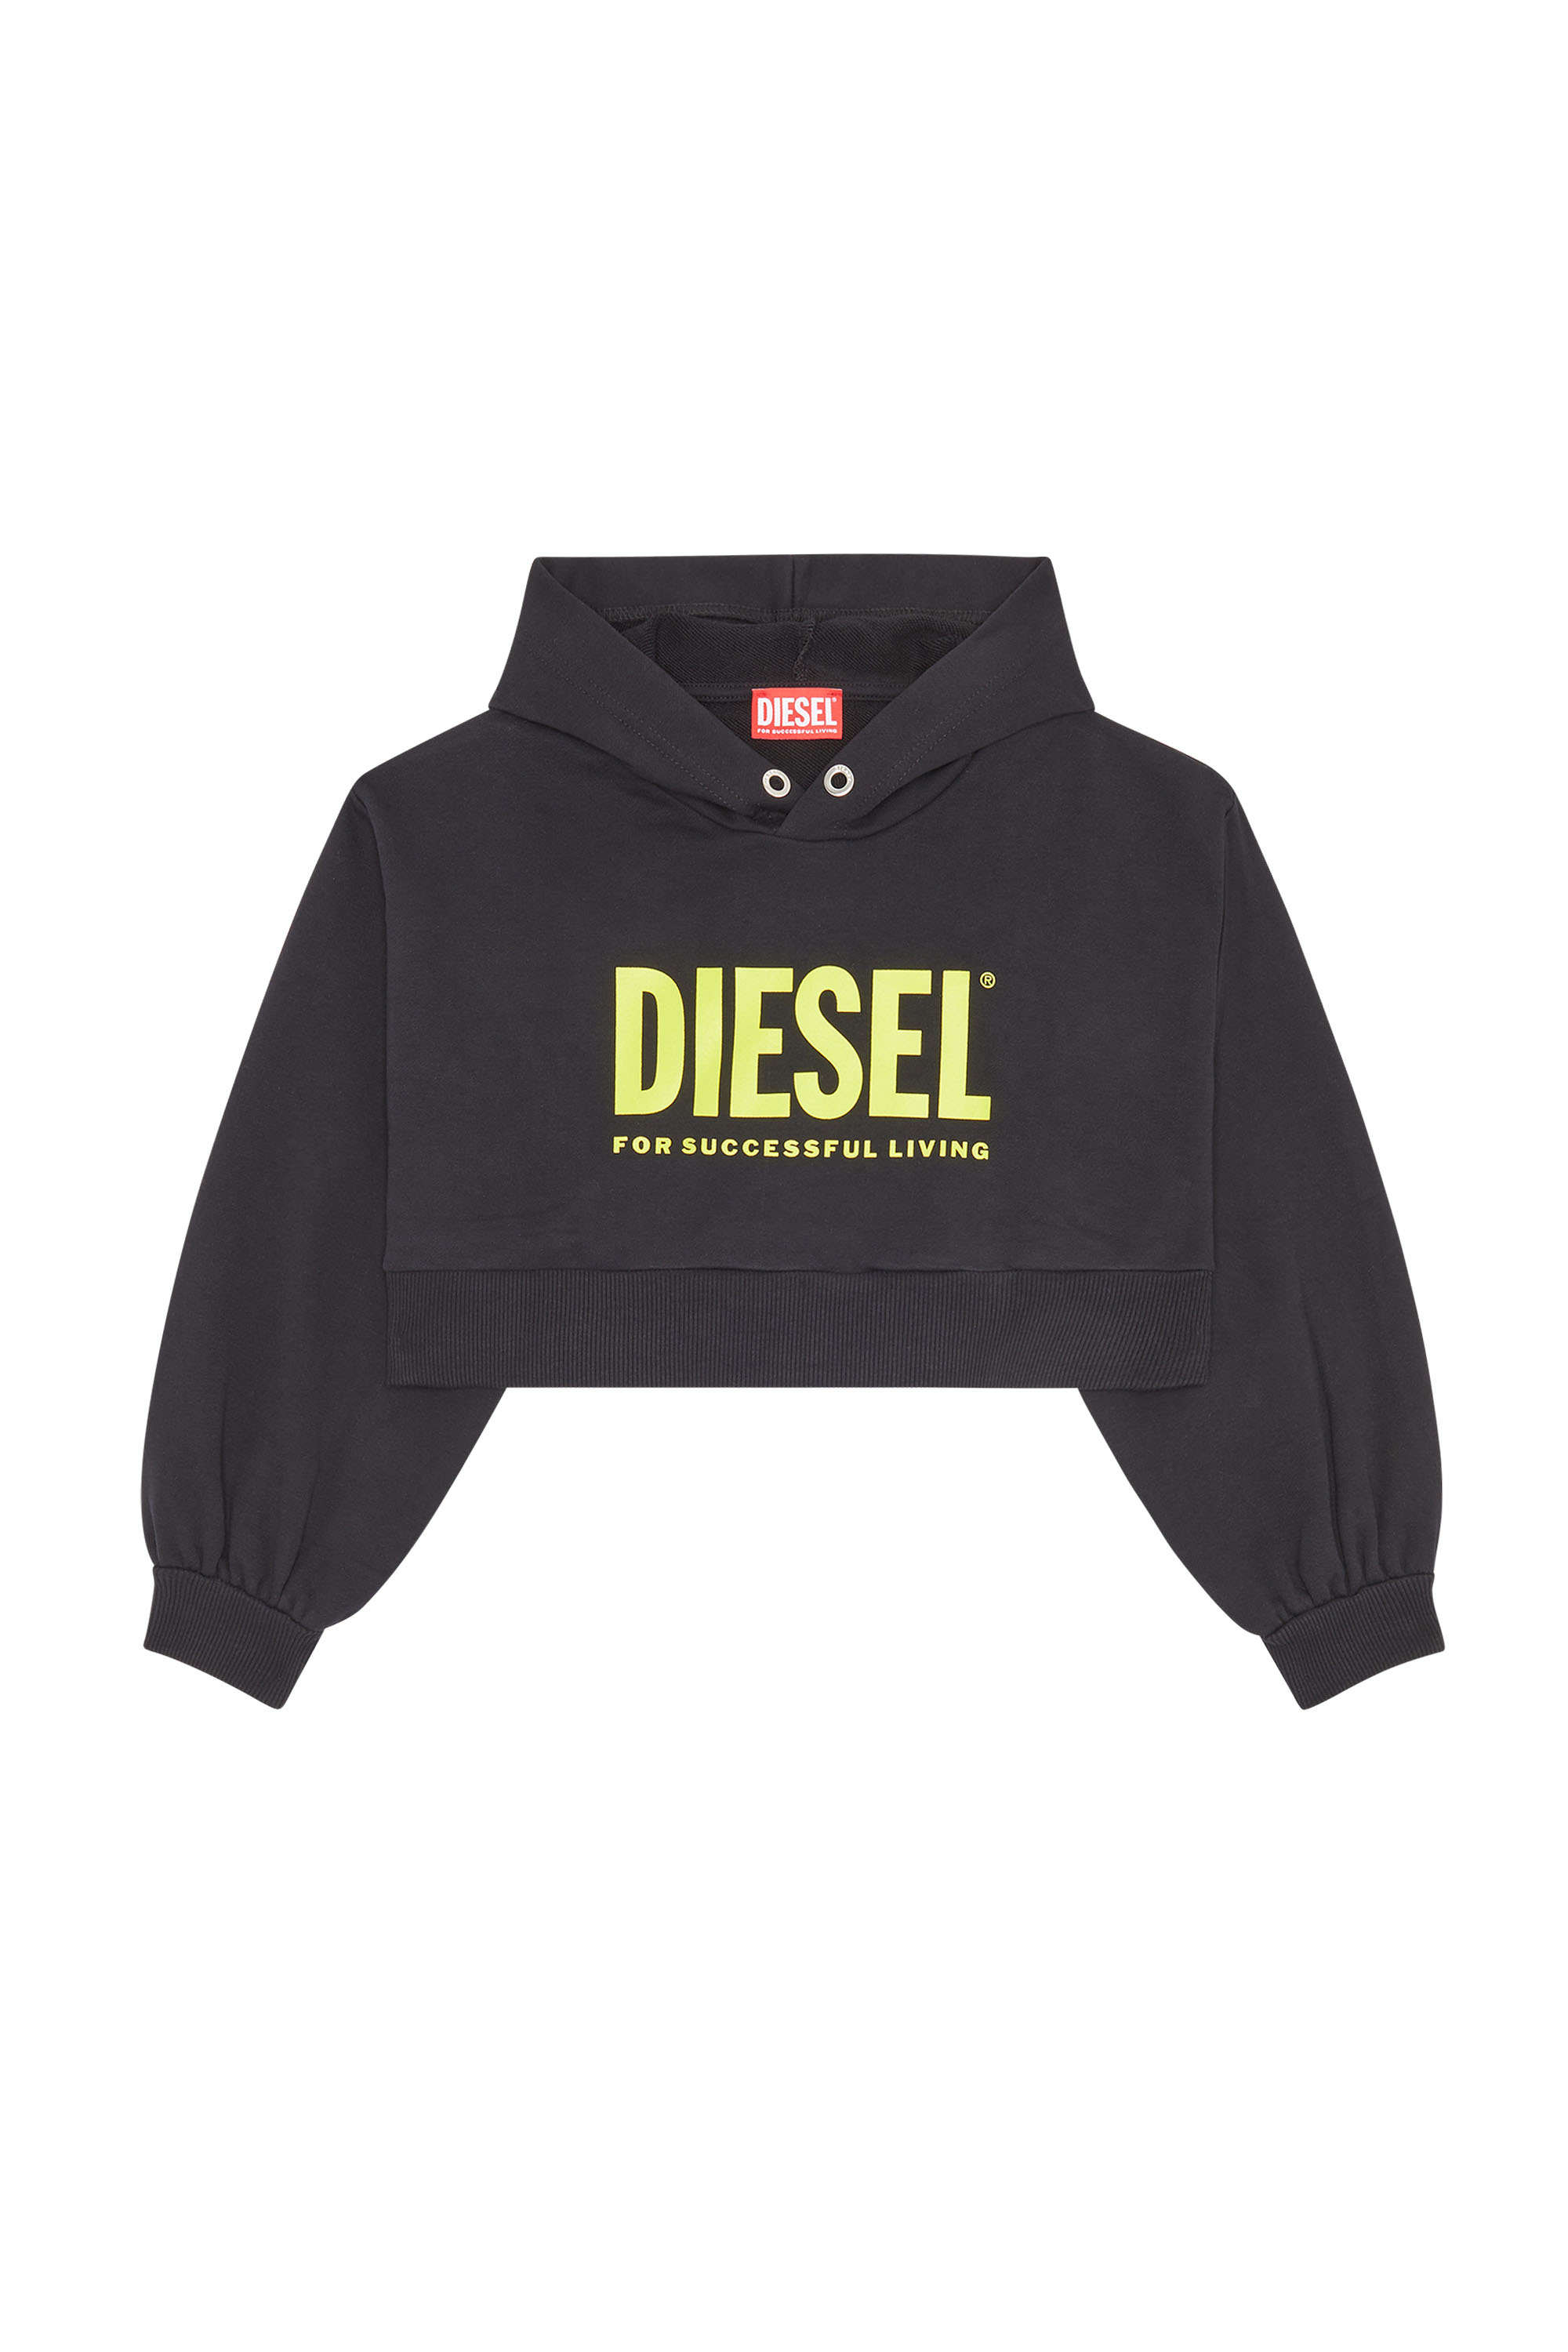 Diesel - SKRALOGO, Black/Yellow - Image 1